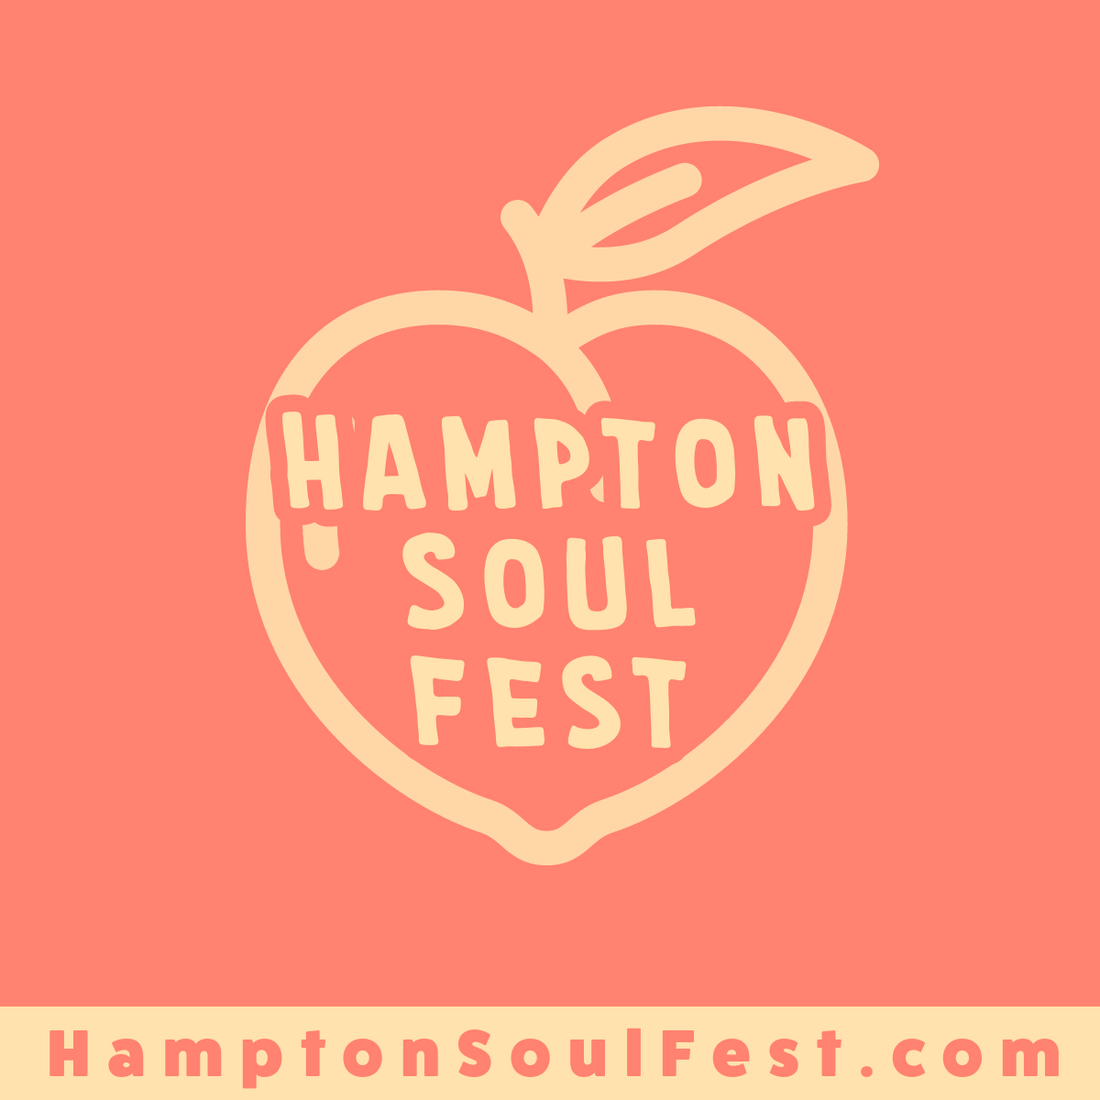 The Hampton Soul Festival Workshop and Outdoor Festival